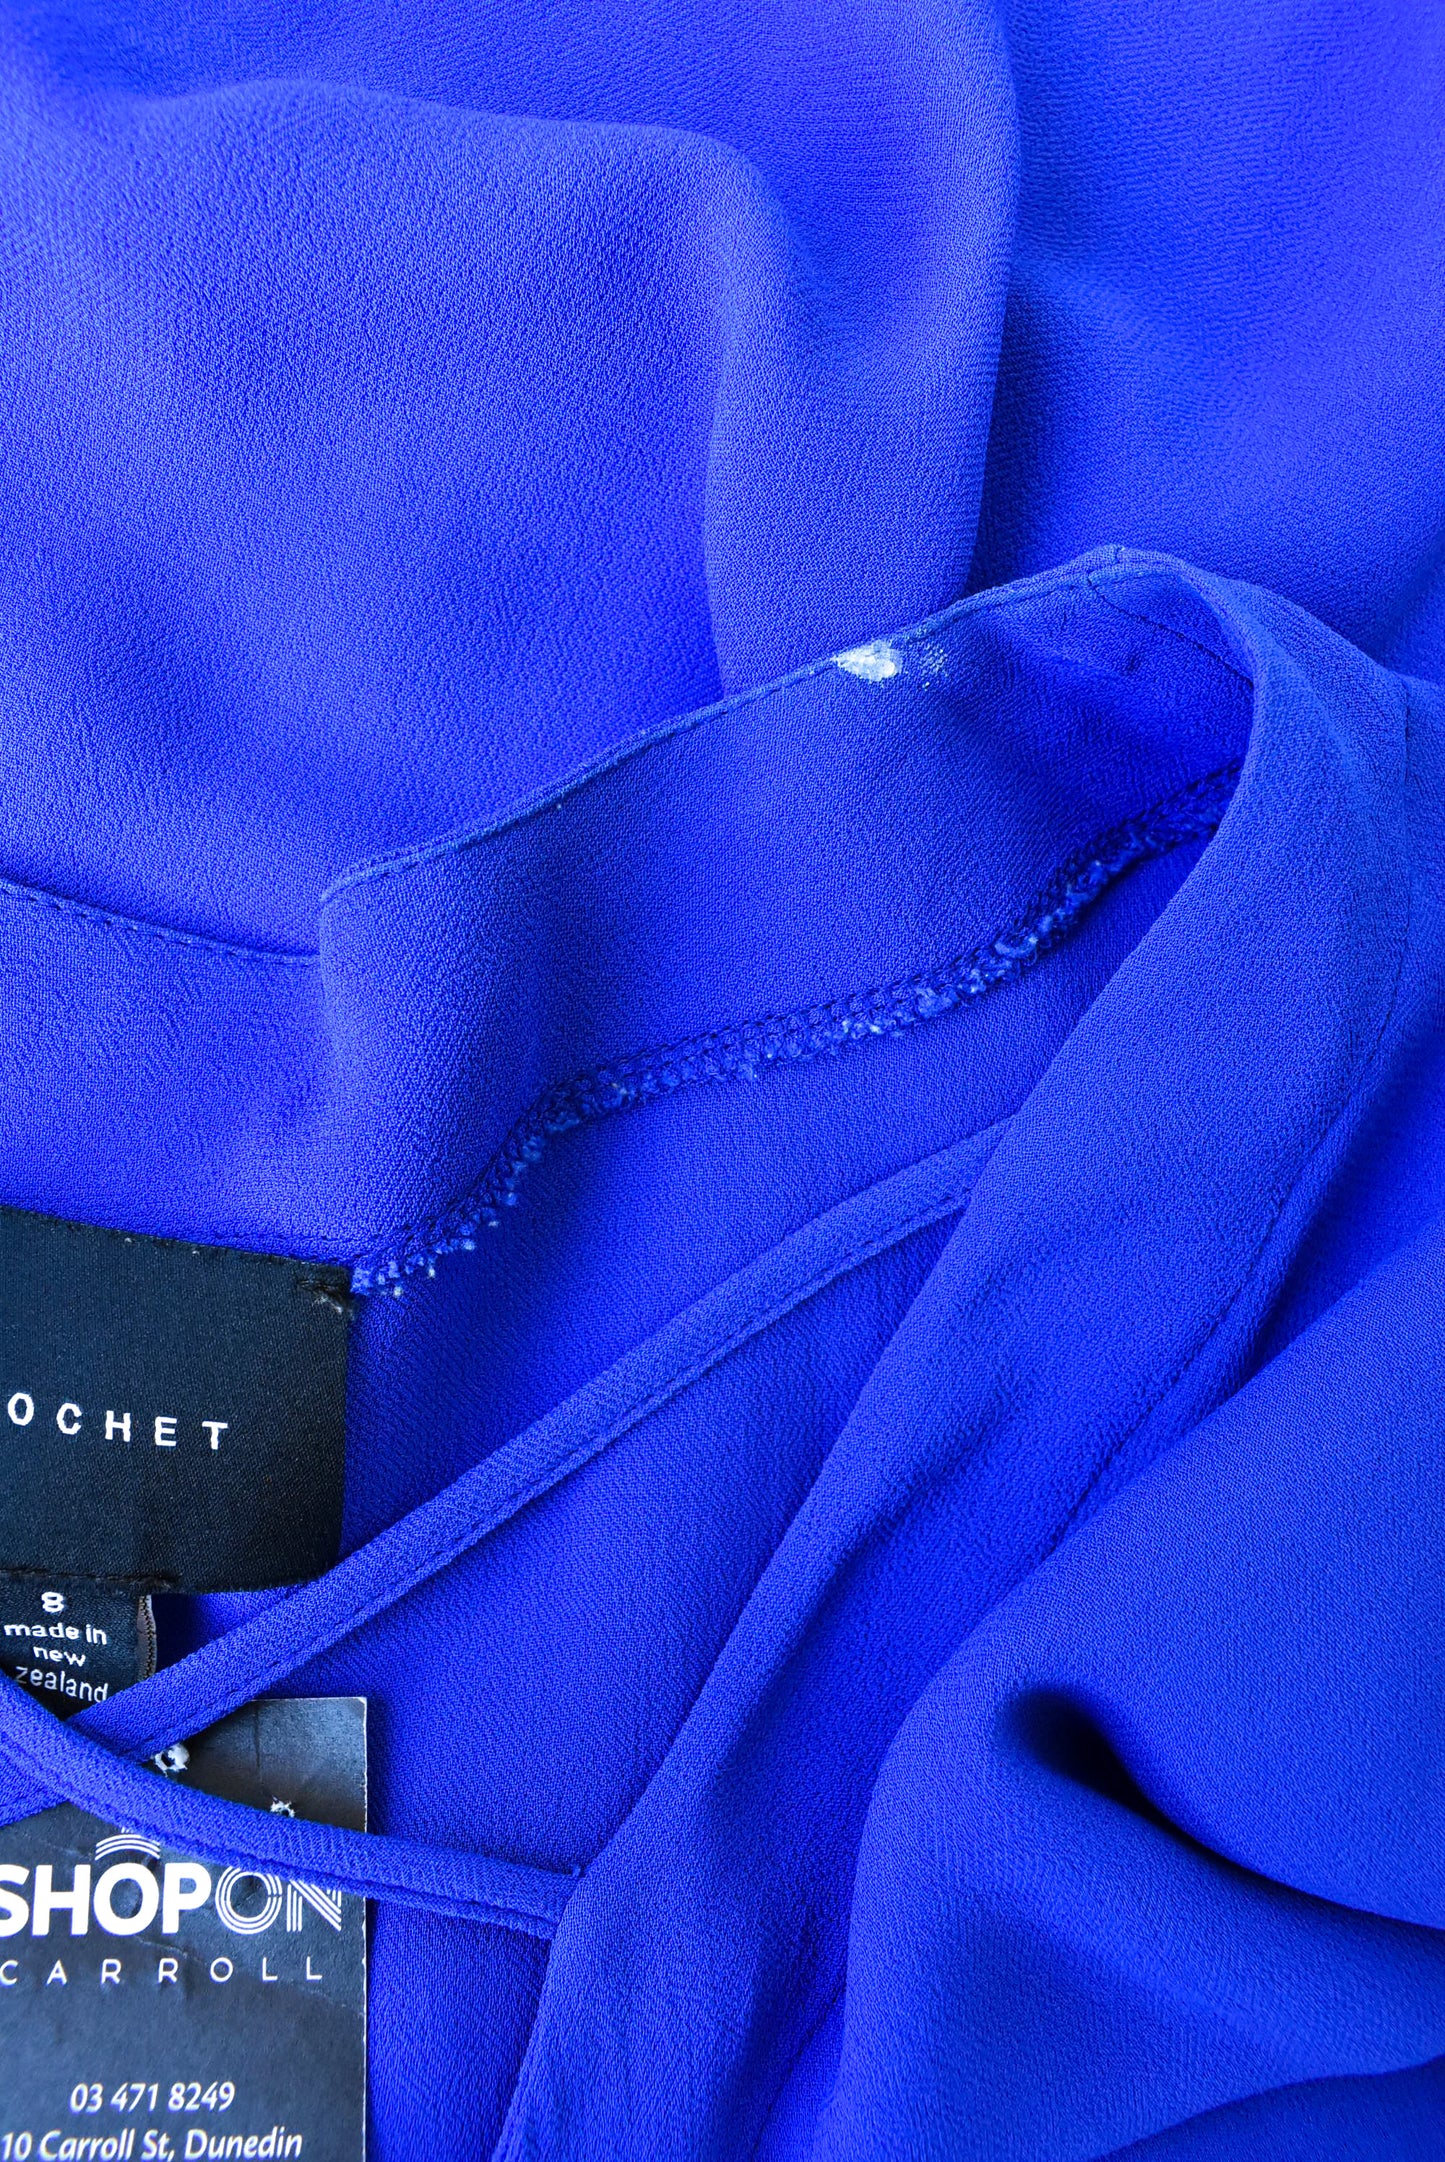 Ricochet sheer blue shift dress, size 8